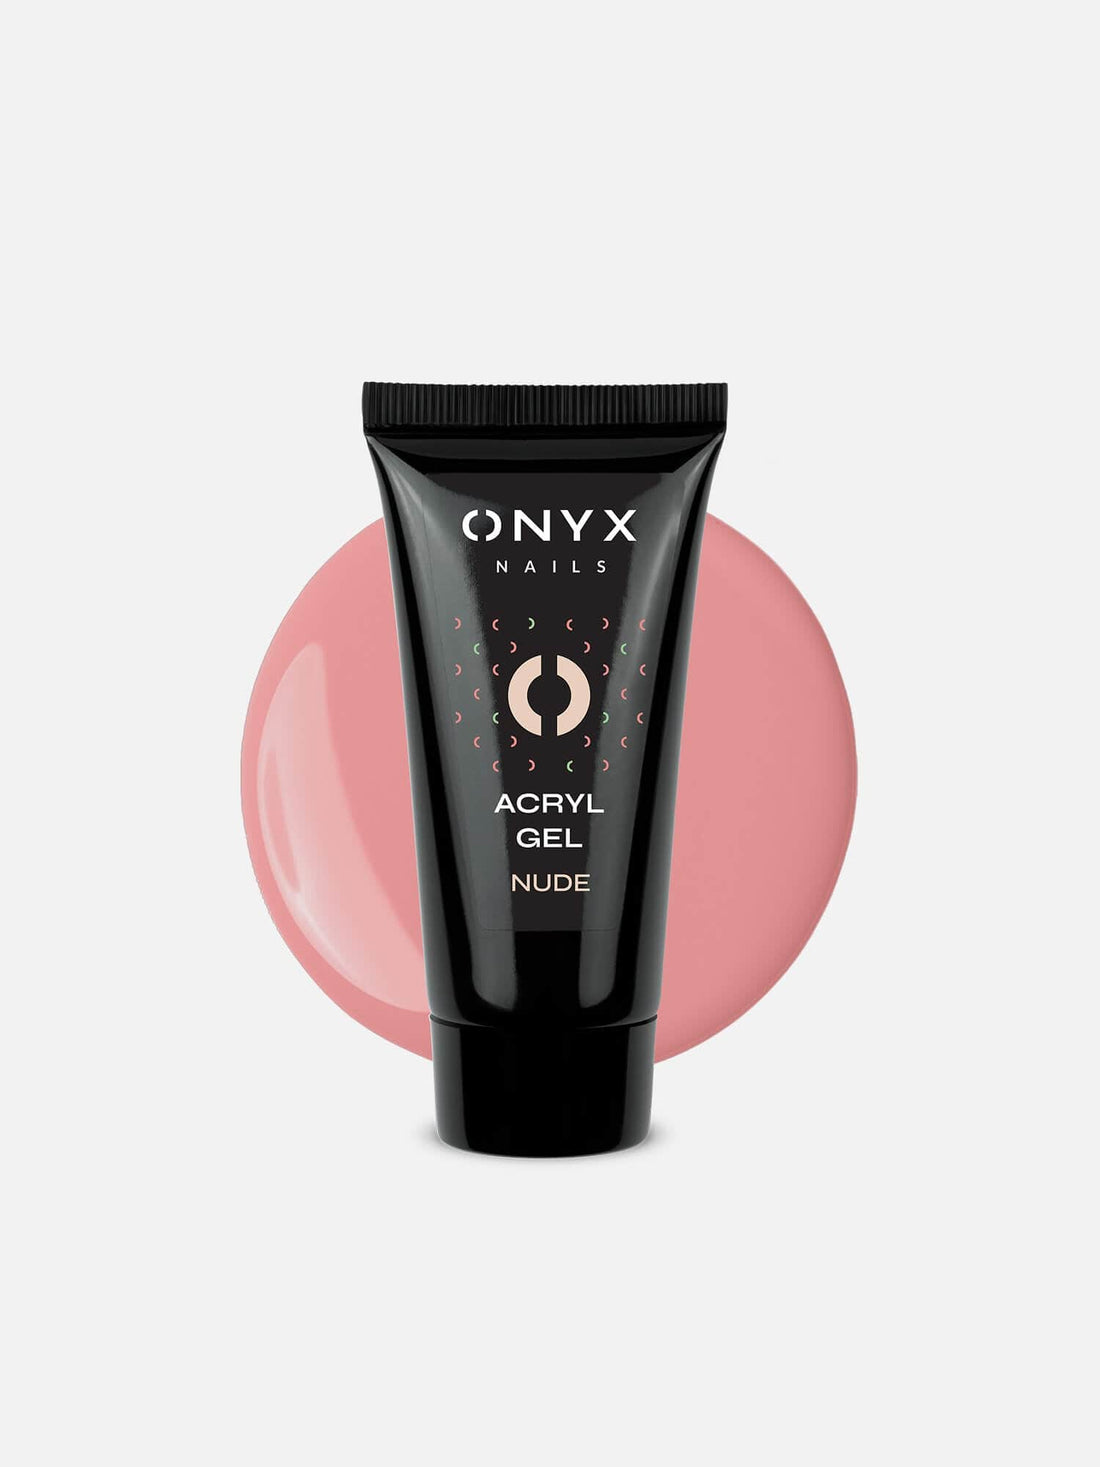 Onyx Nails AcrylGel Nude 30 g